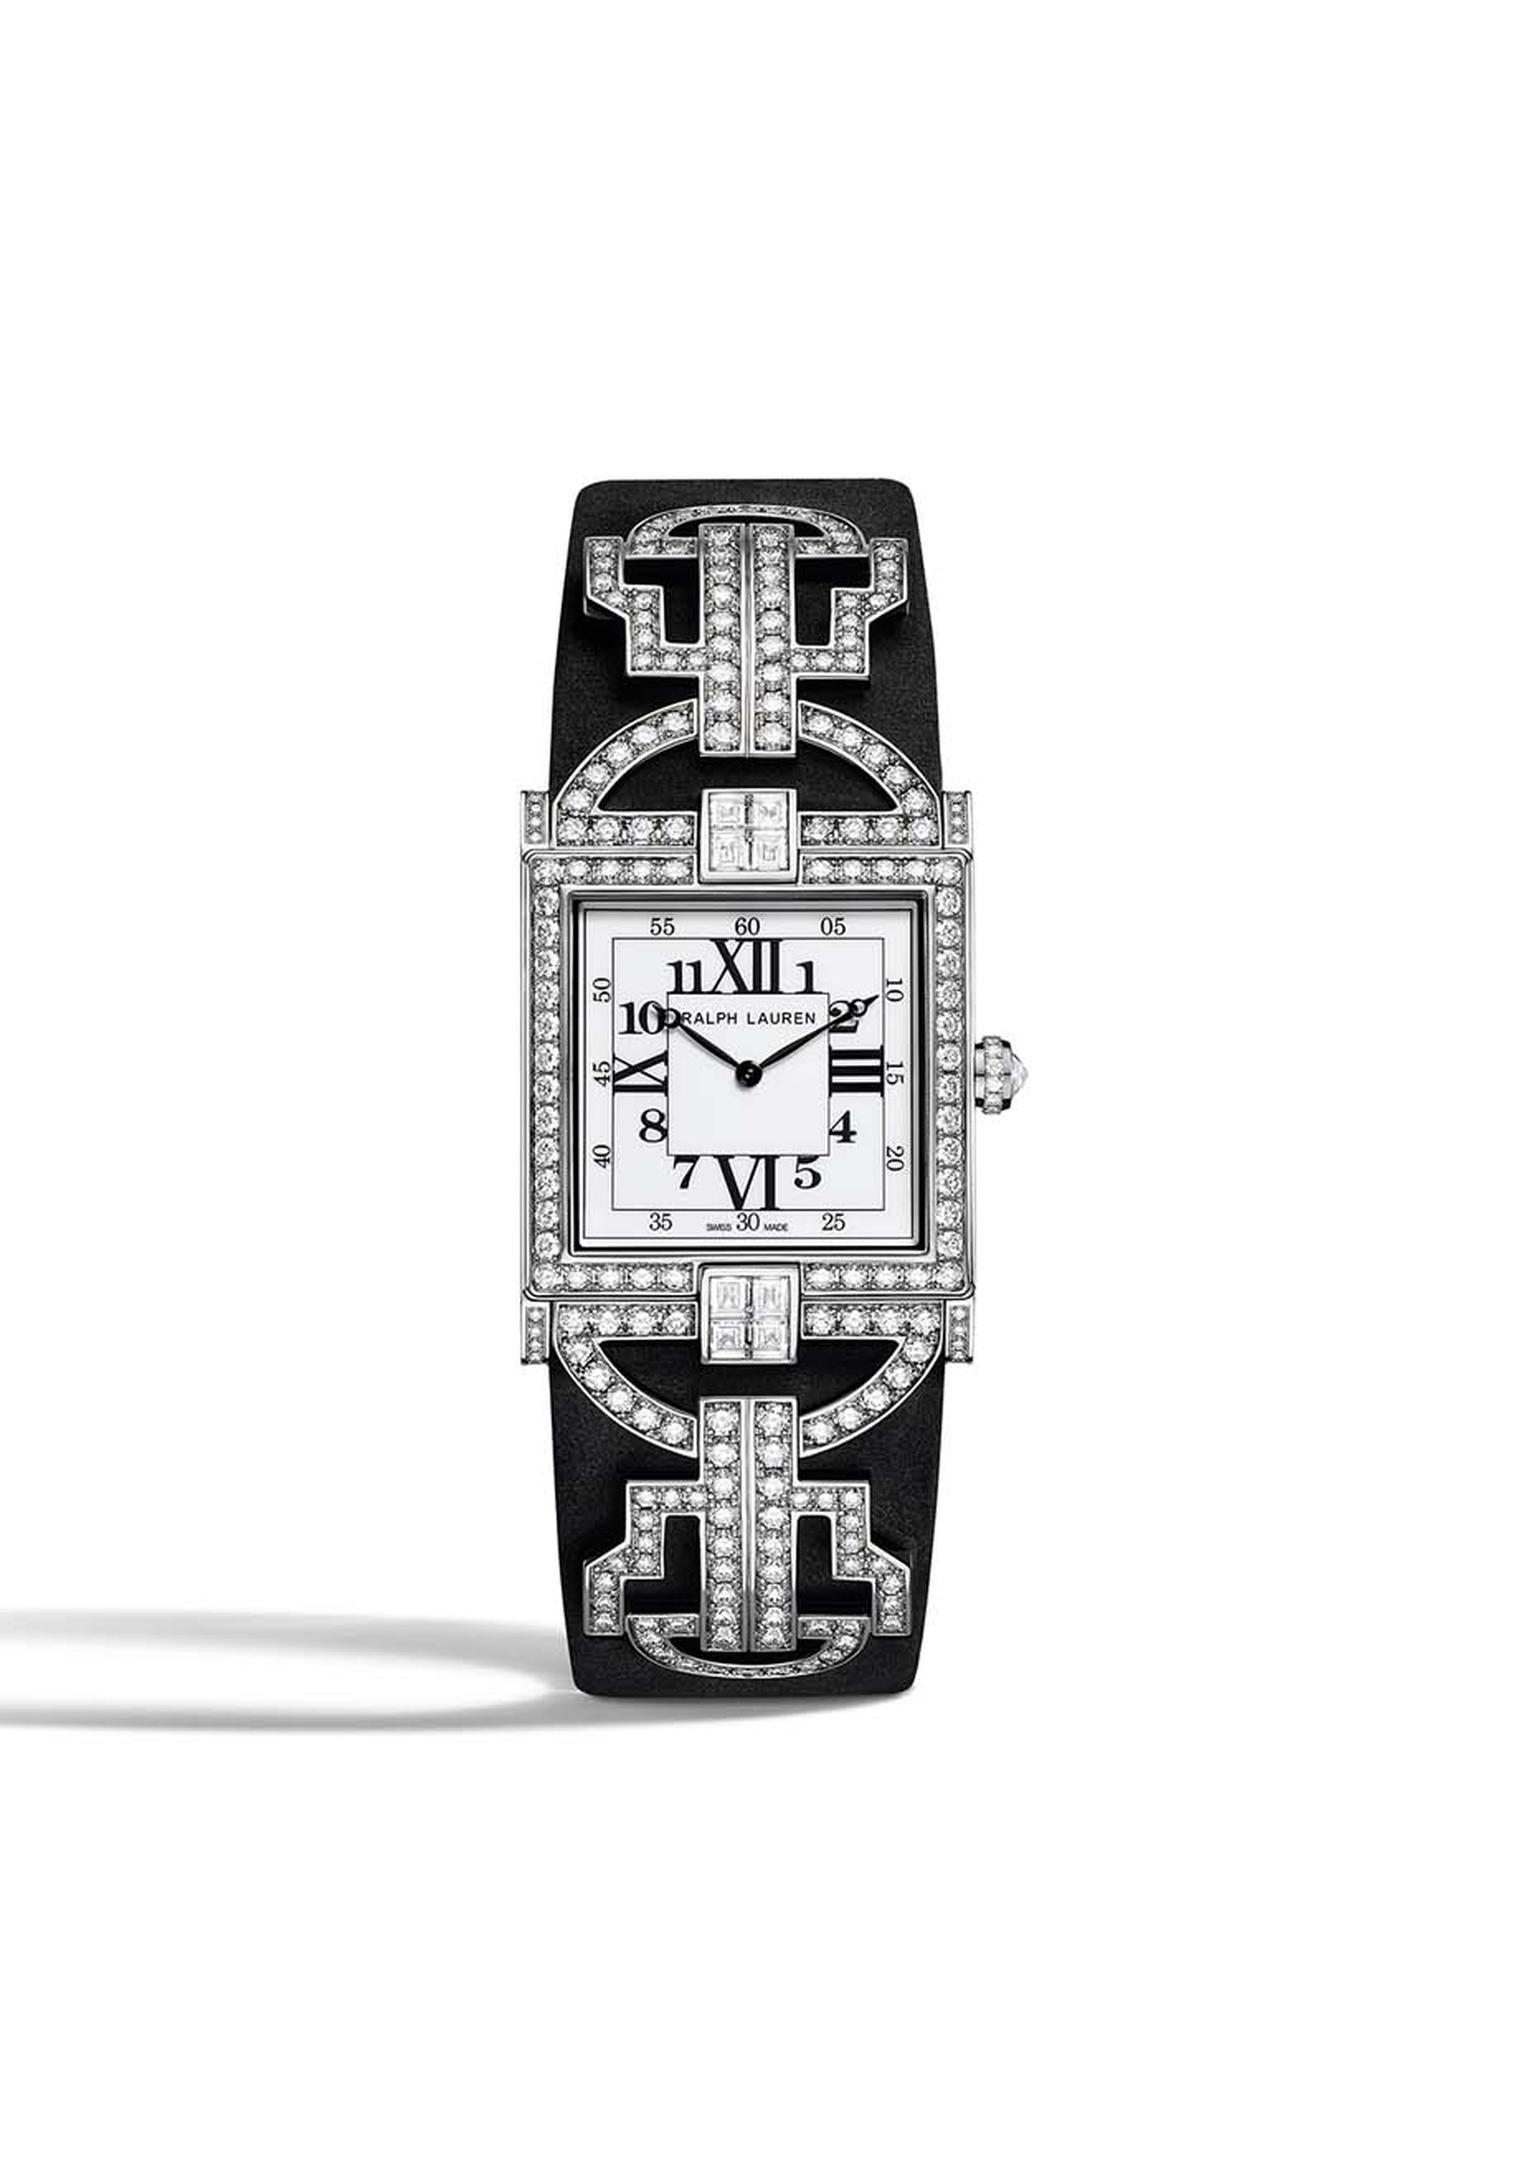 Ralph Lauren 867 Timepiece with a black suede strap